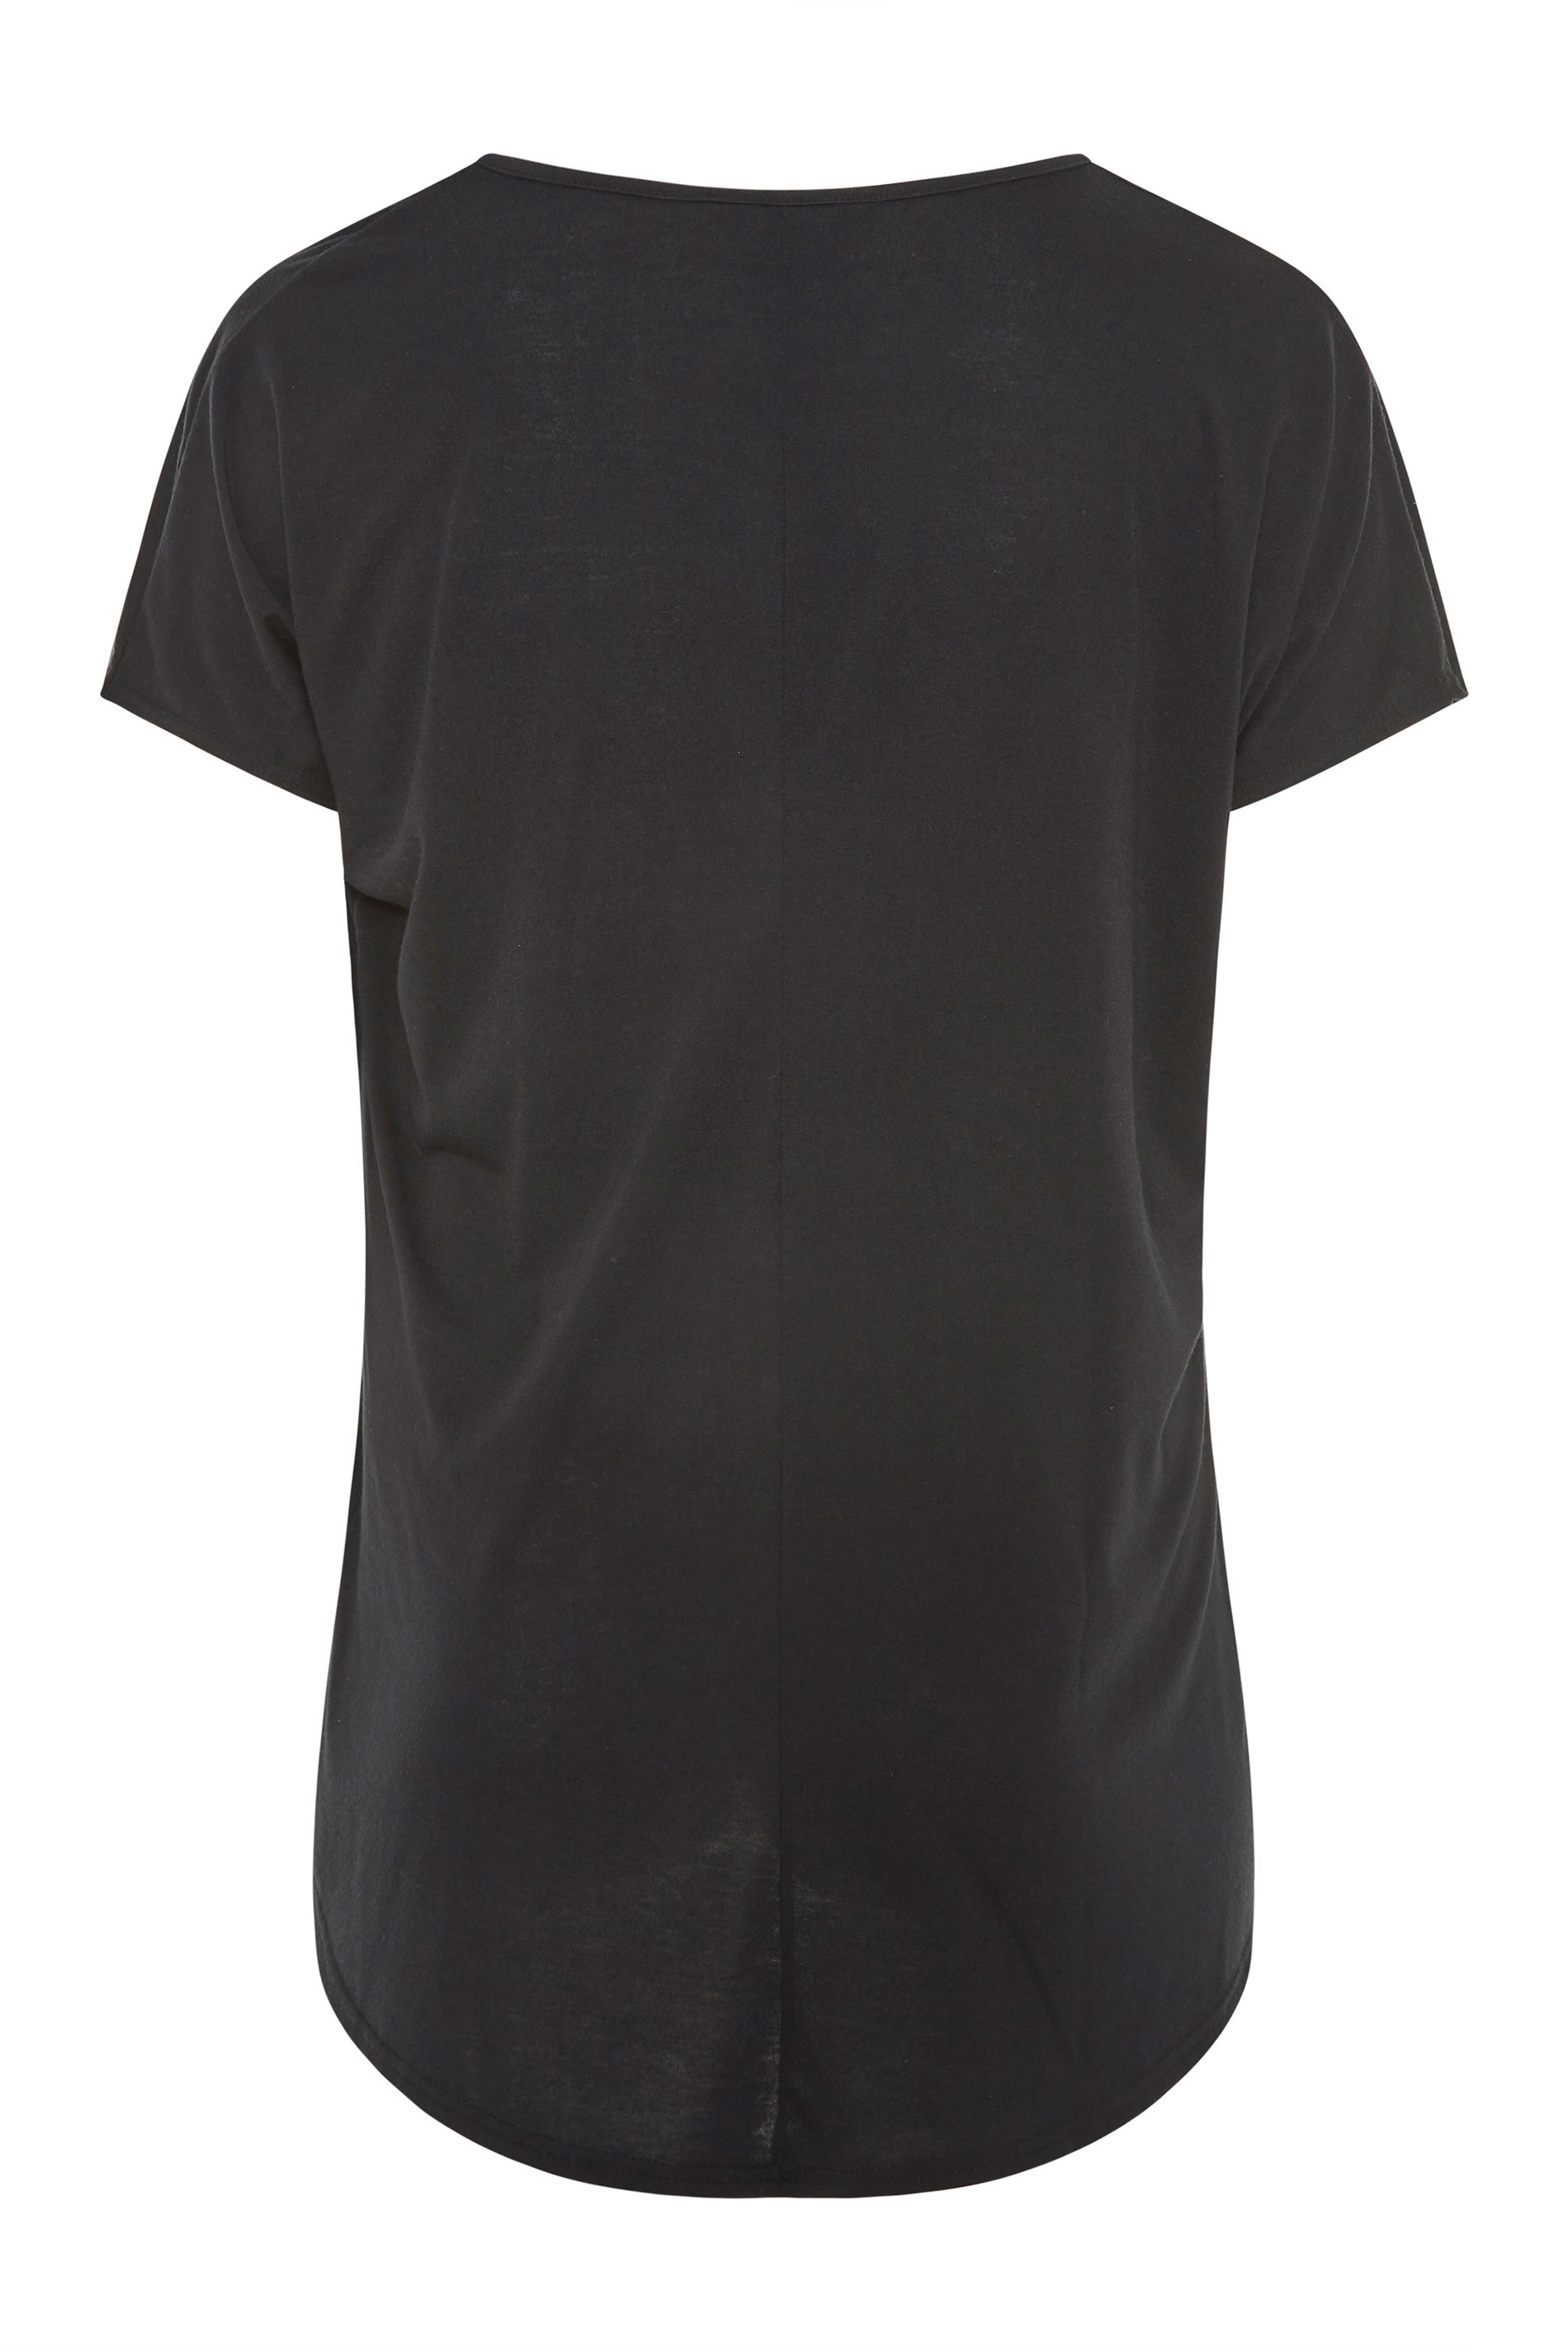 Grande taille  Tops Grande taille  T-Shirts | T-Shirt Noir Coeurs Léopard - GJ47112